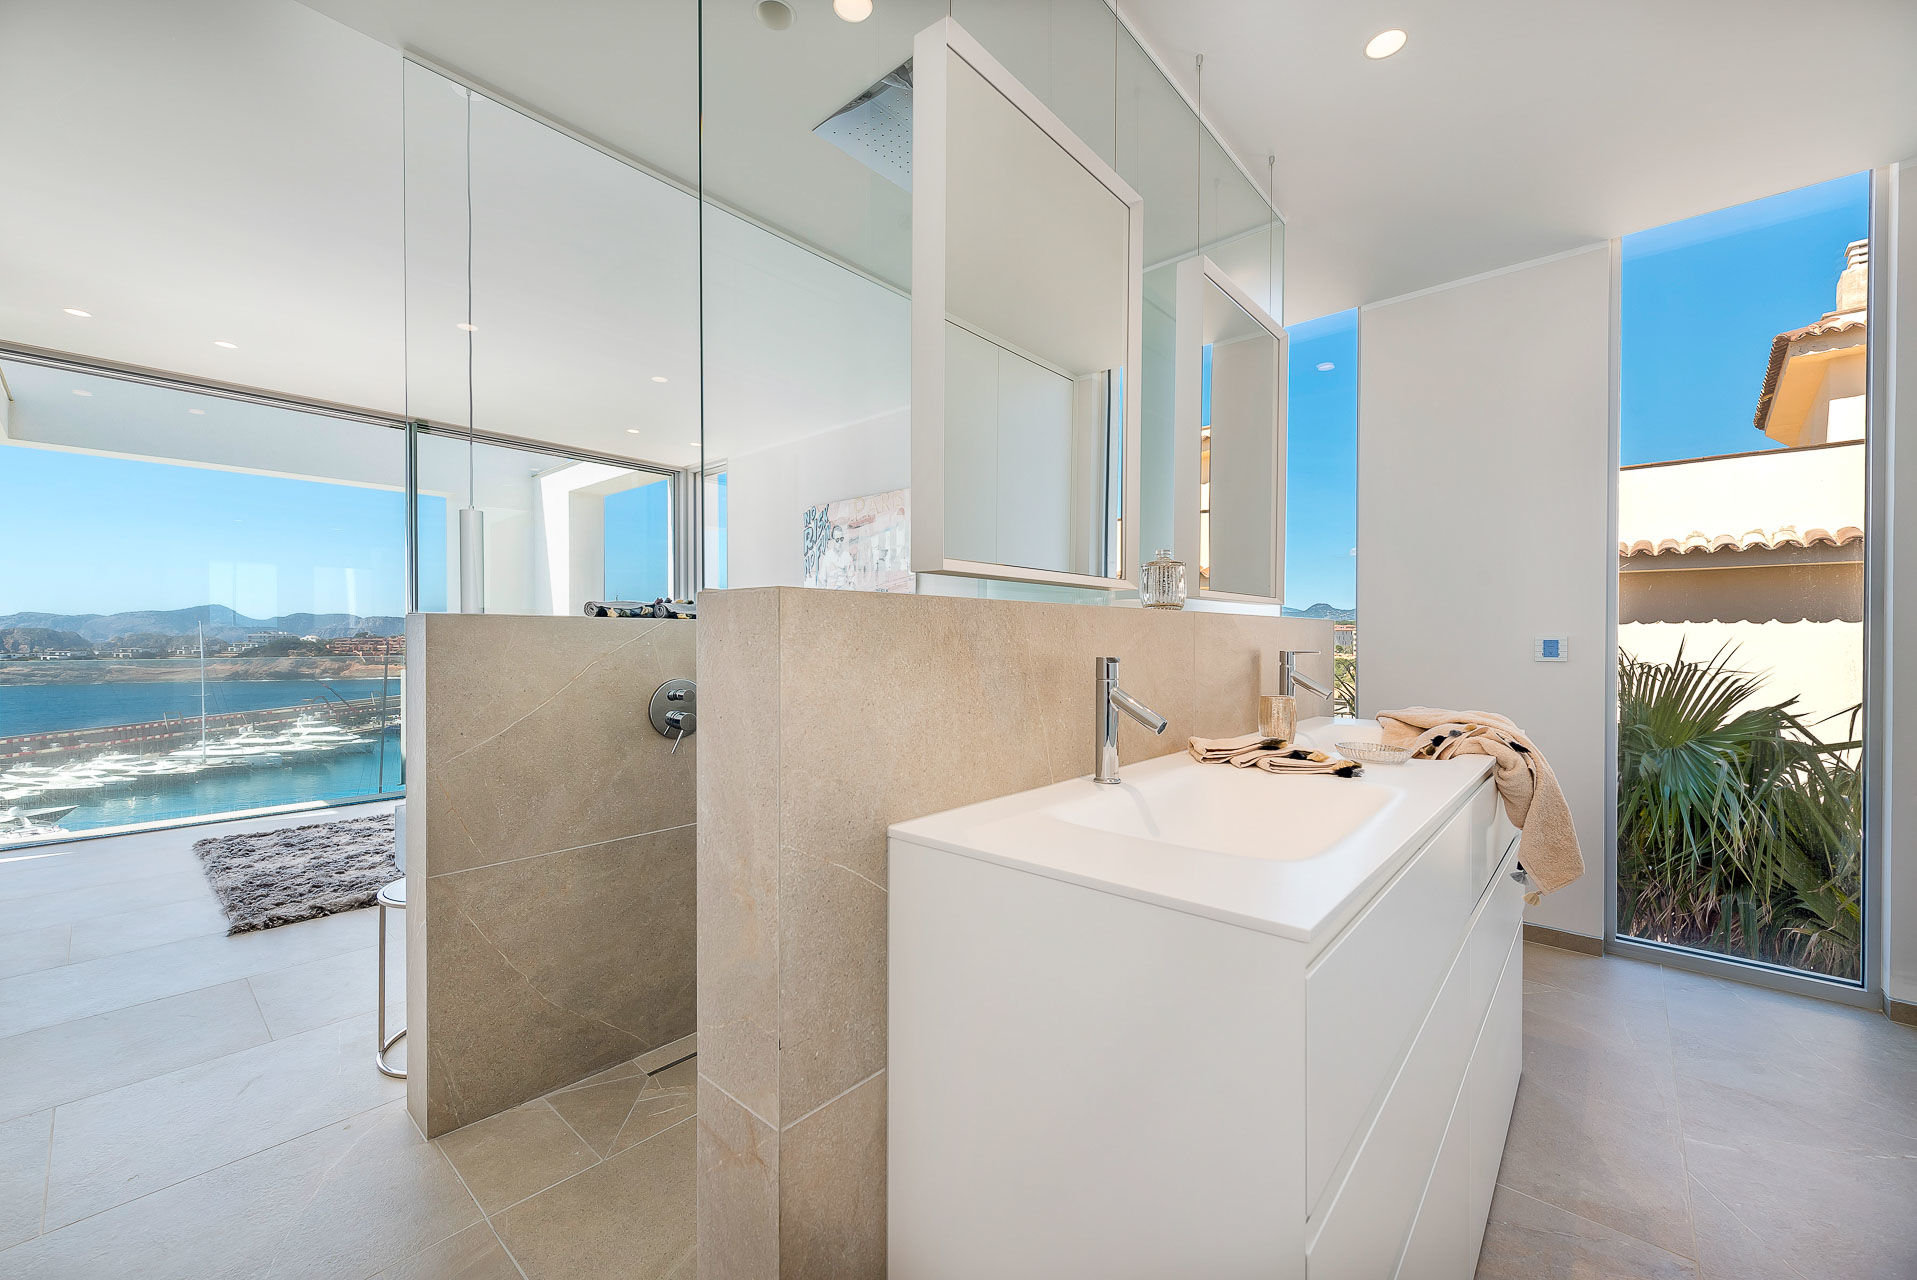 Luxurious new built front line villa - Bathroom 1